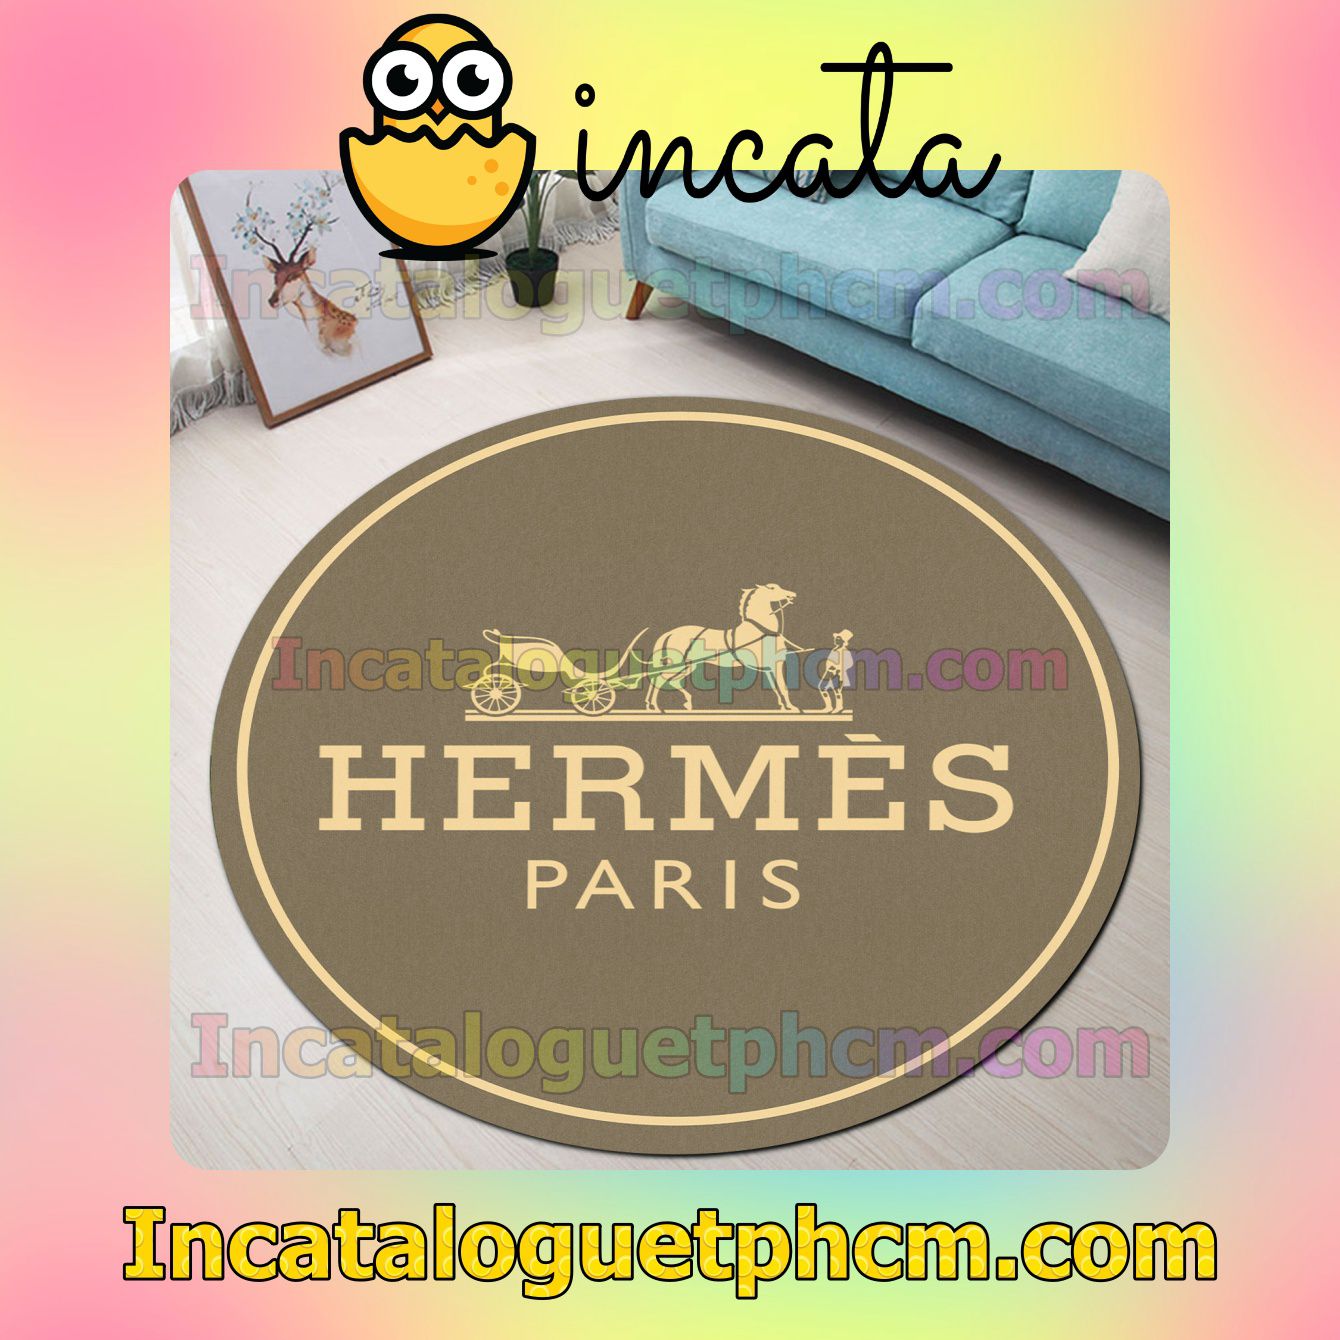 Hermes Paris Luxury Brand Light Brown Round Carpet Rugs For Kitchen